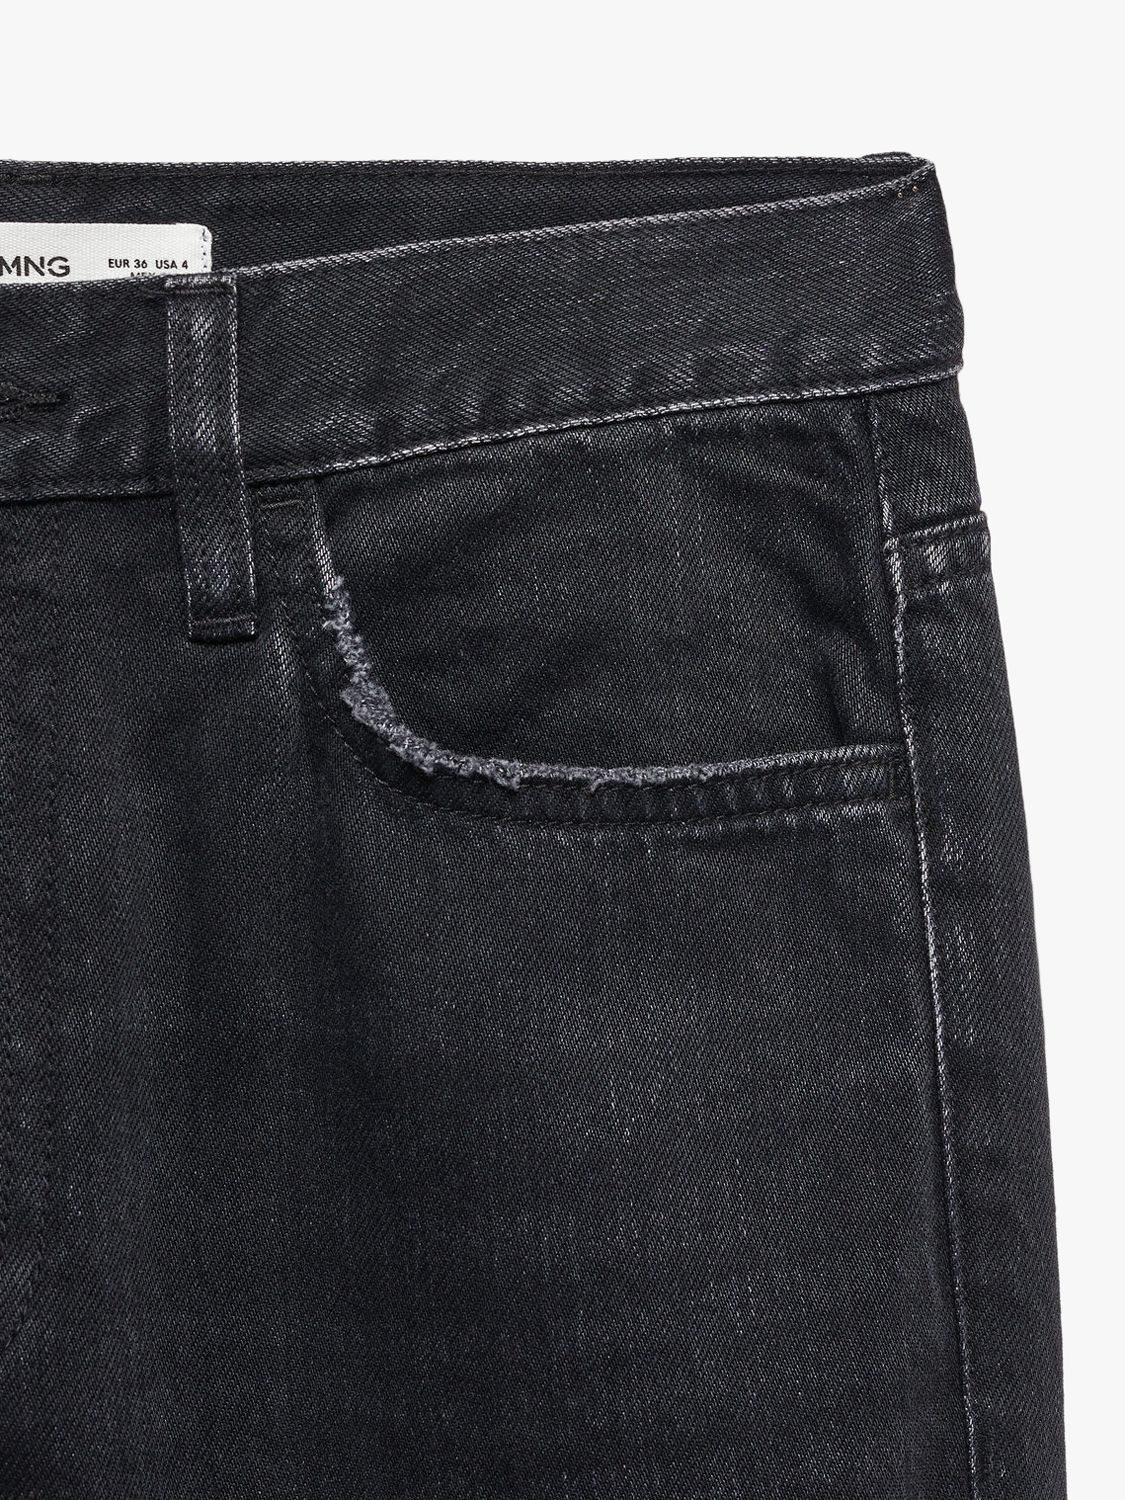 Mango Matilda Straight Leg Jeans, Open Grey at John Lewis & Partners